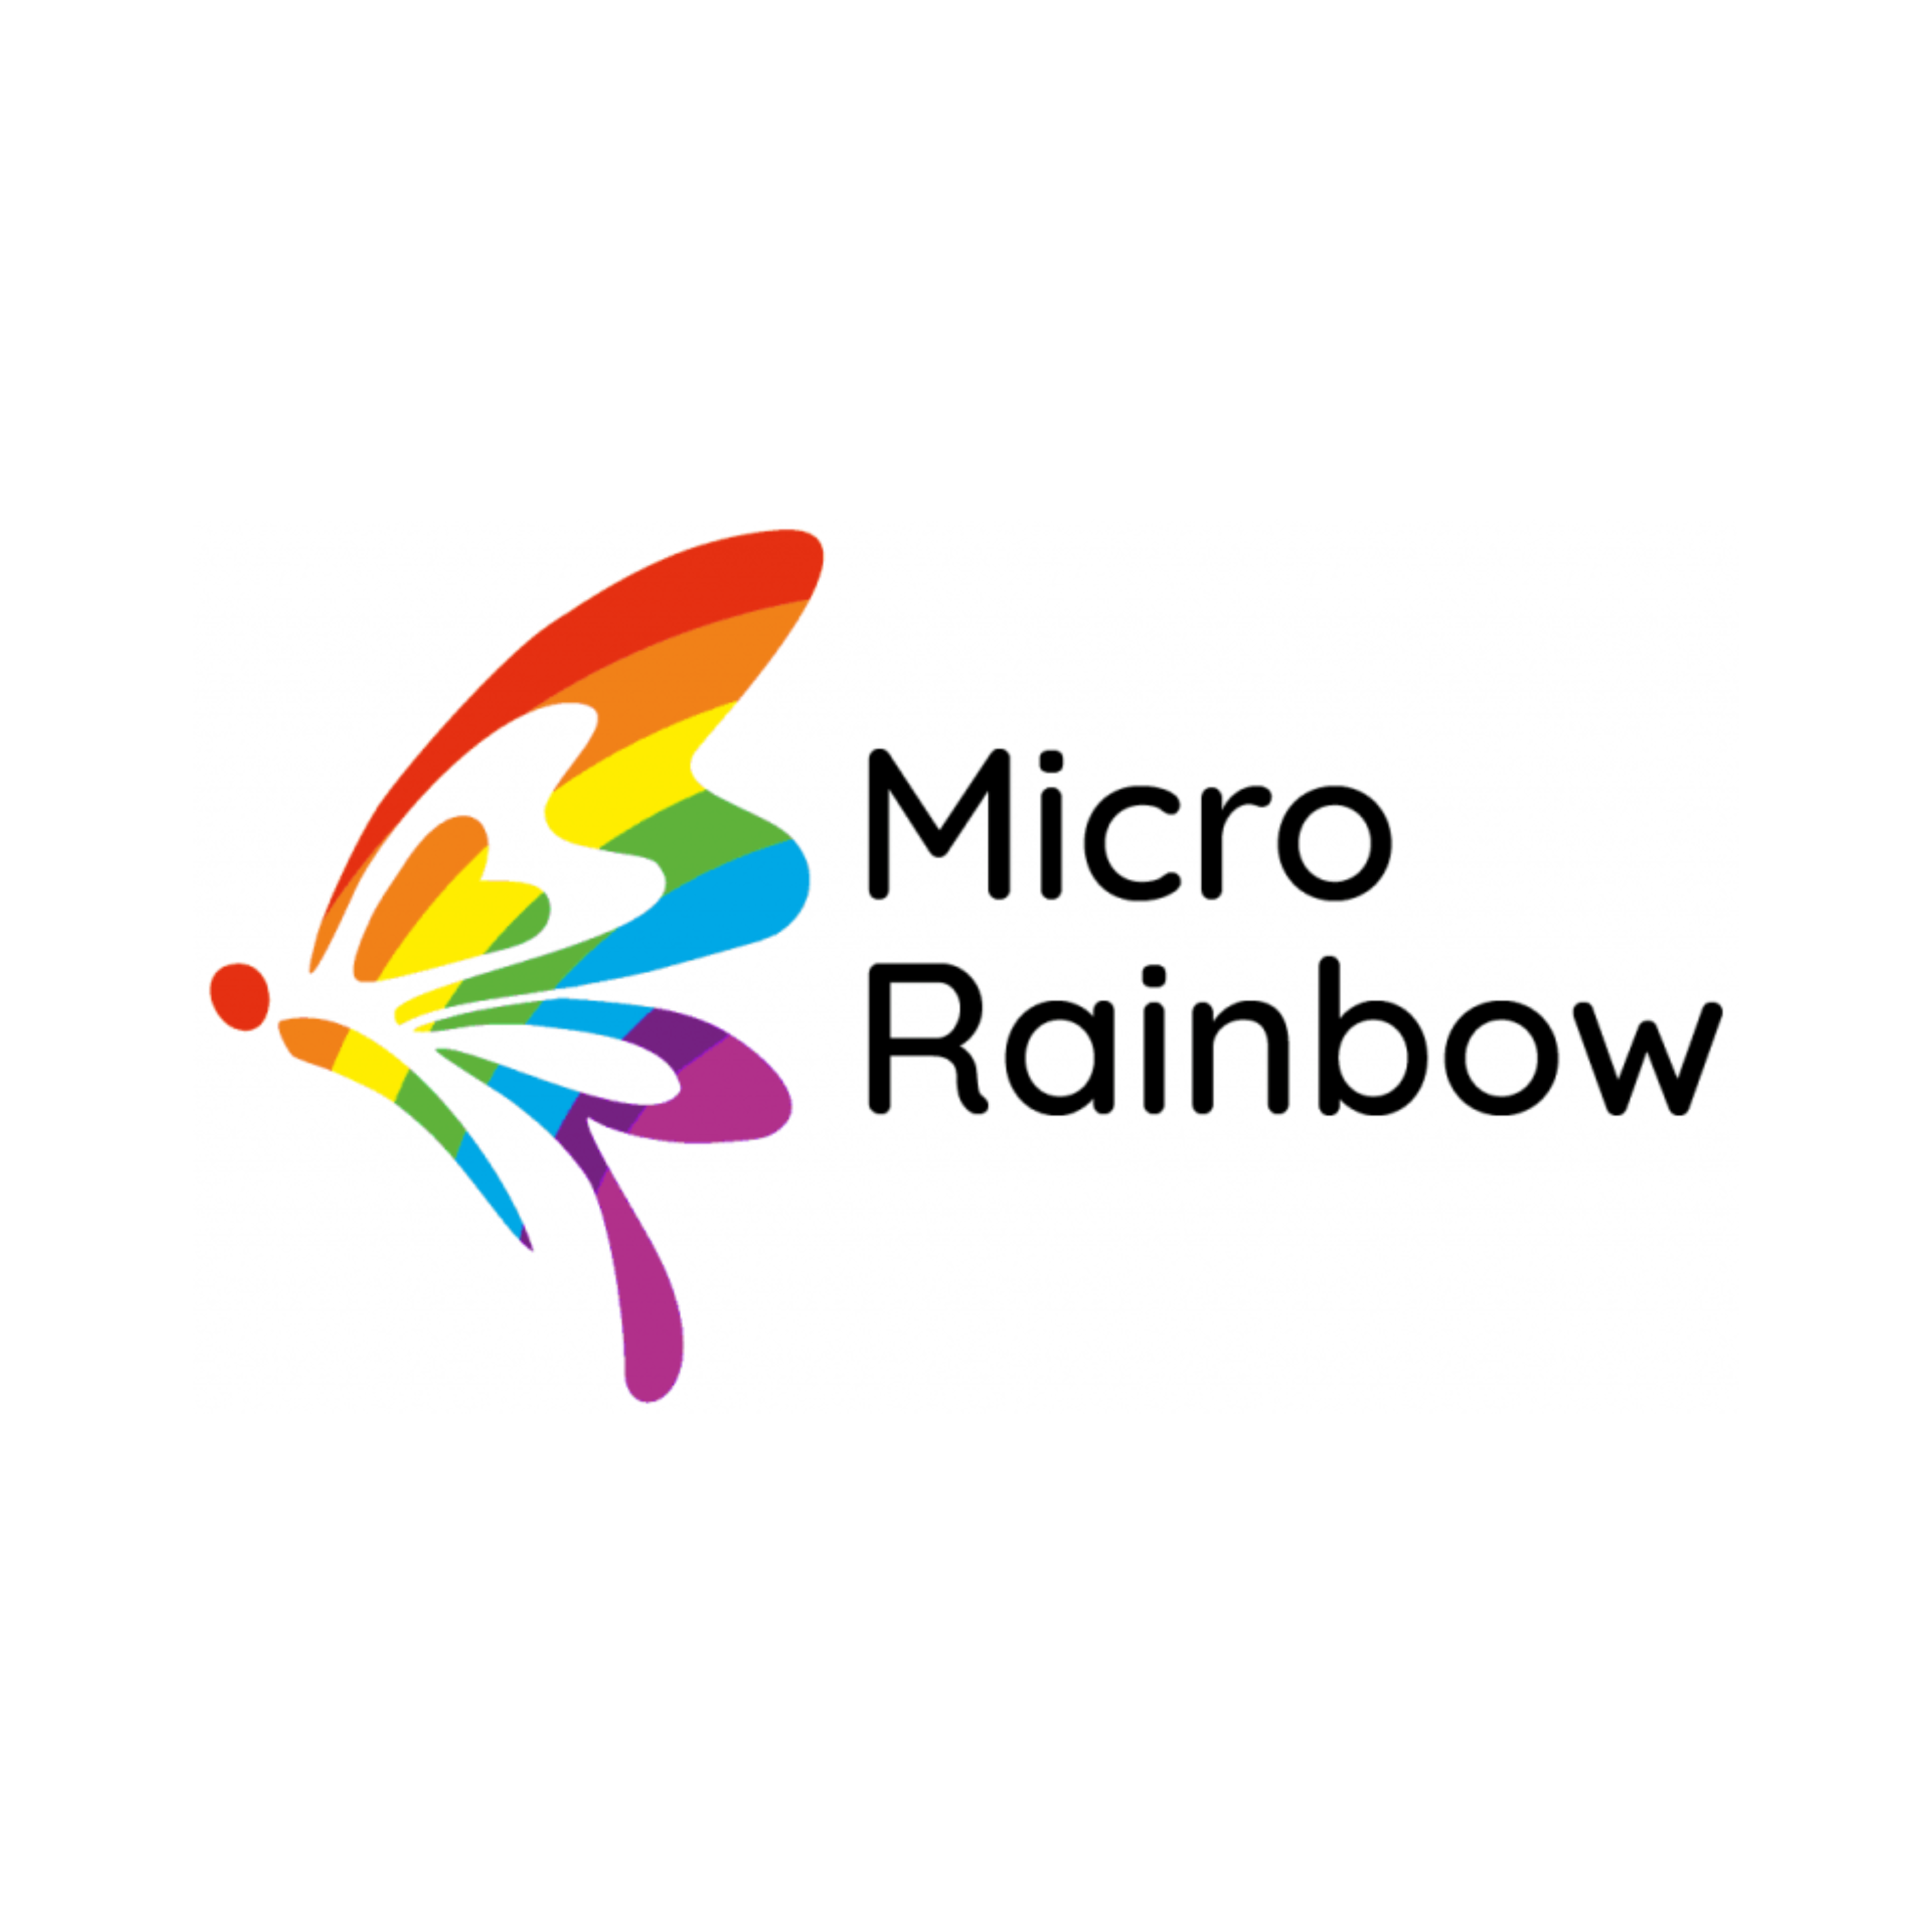 Micro Rainbow